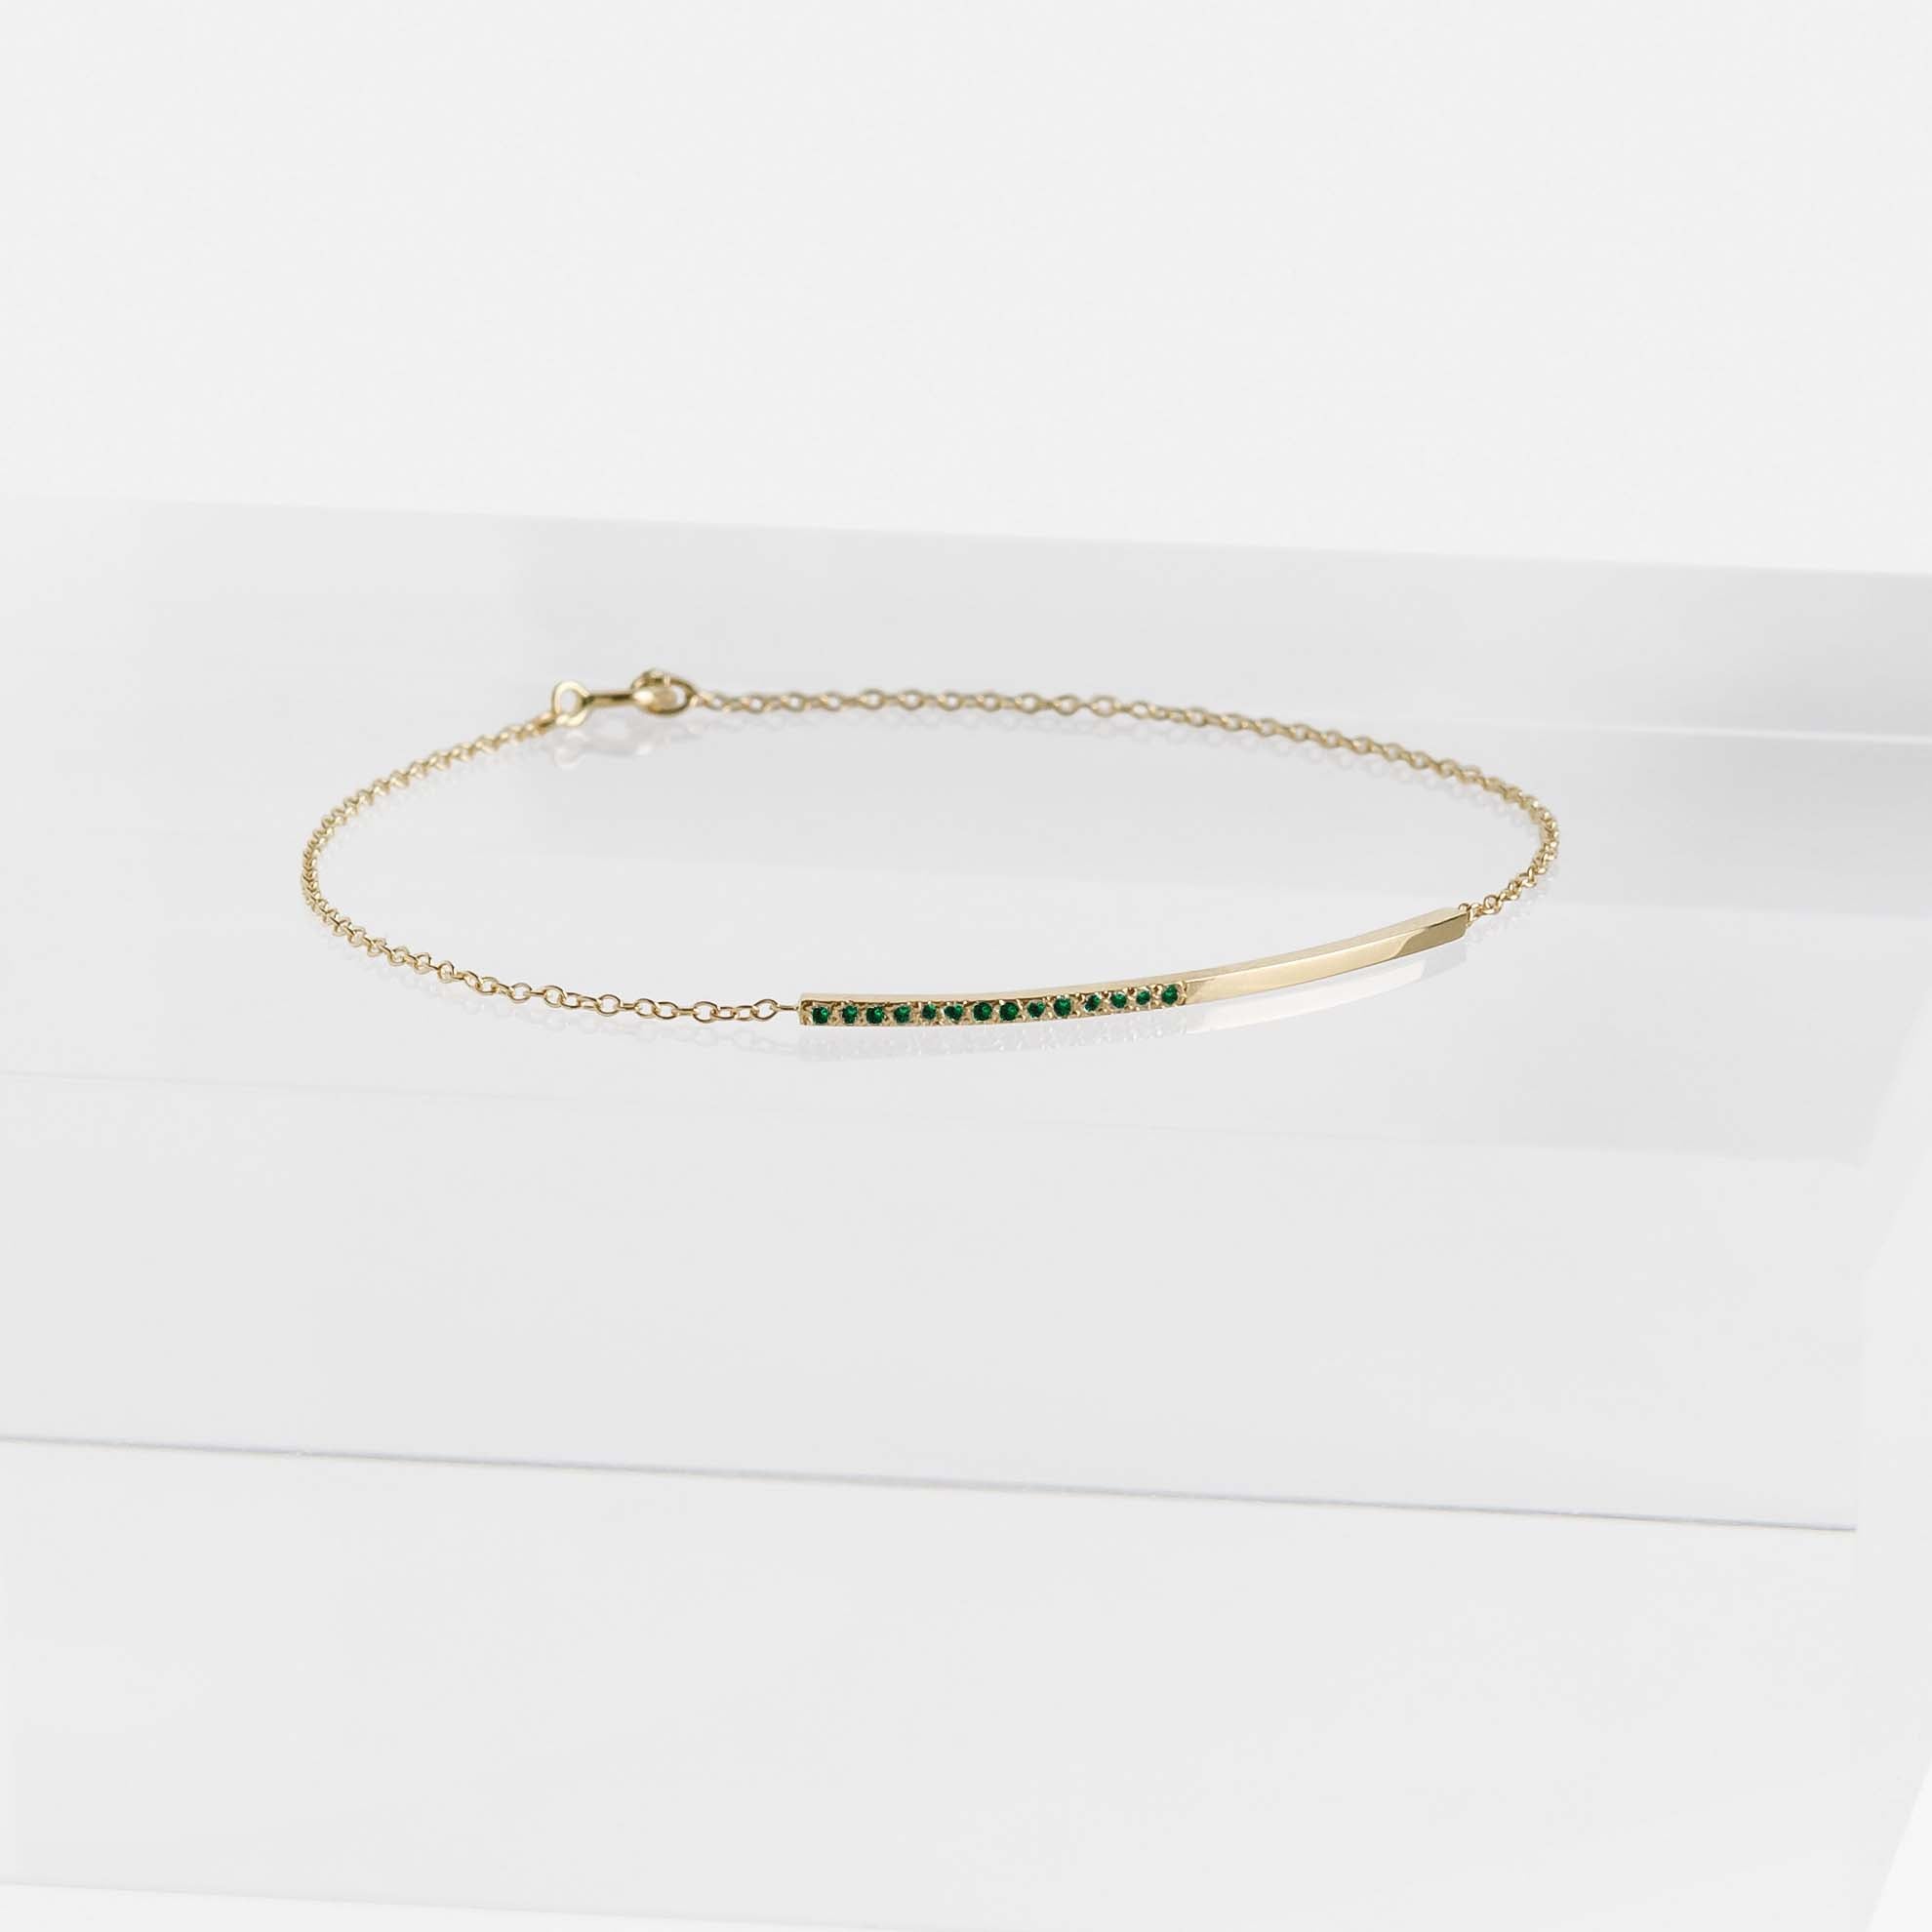 Iva Alternative Bracelet in 14k Gold set with Emeralds By SHW Fine Jewelry NYC